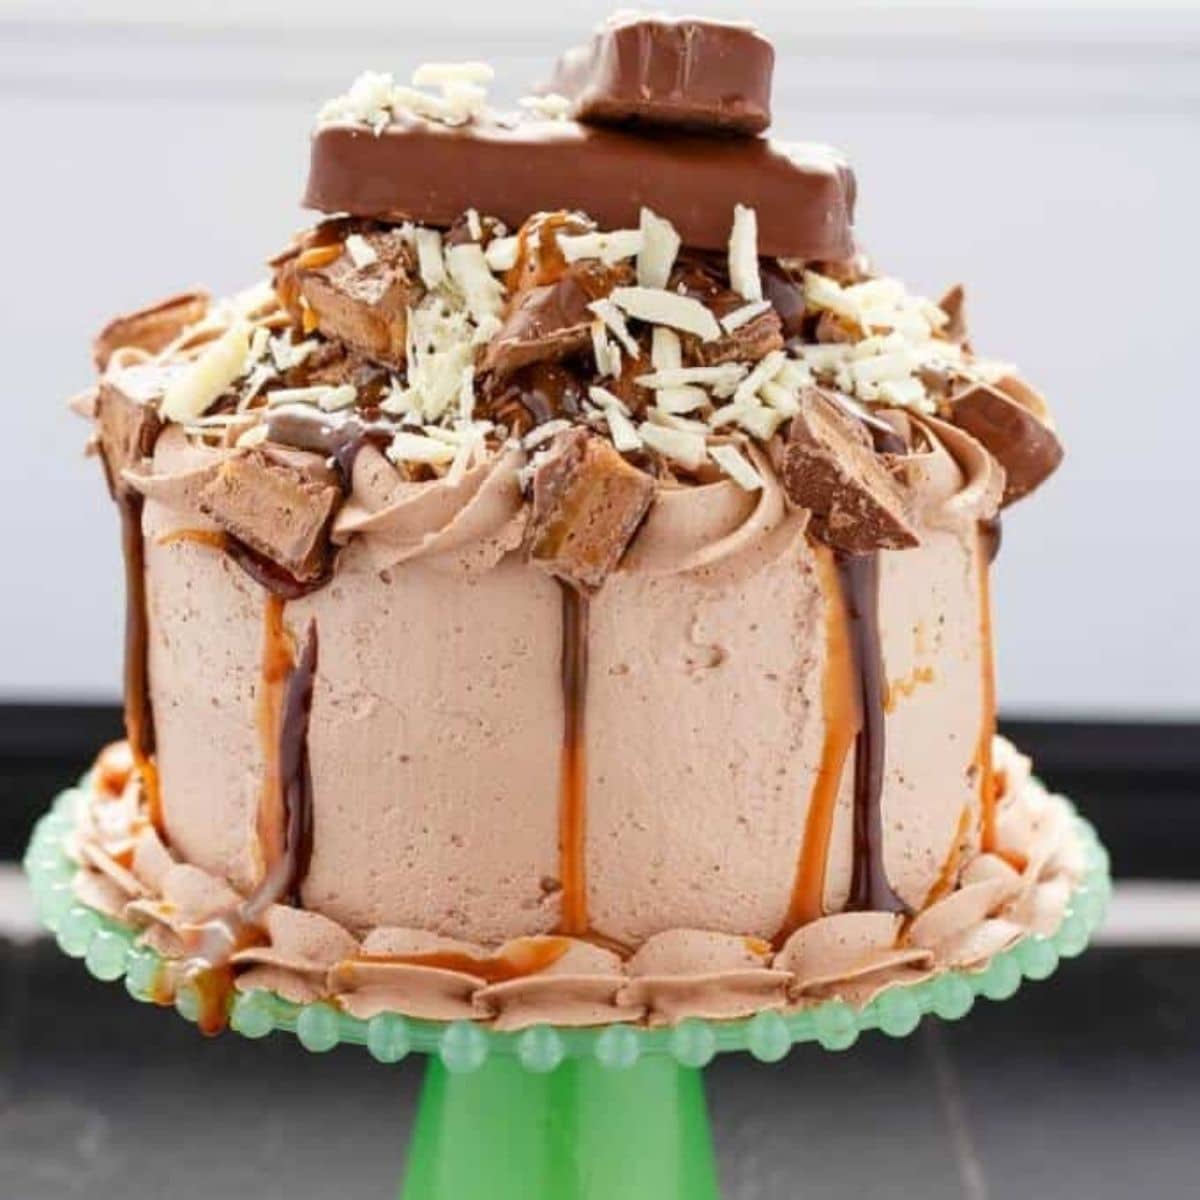 Funfetti Candy Birthday Cake | The Best Birthday Cake to Make Your Kid